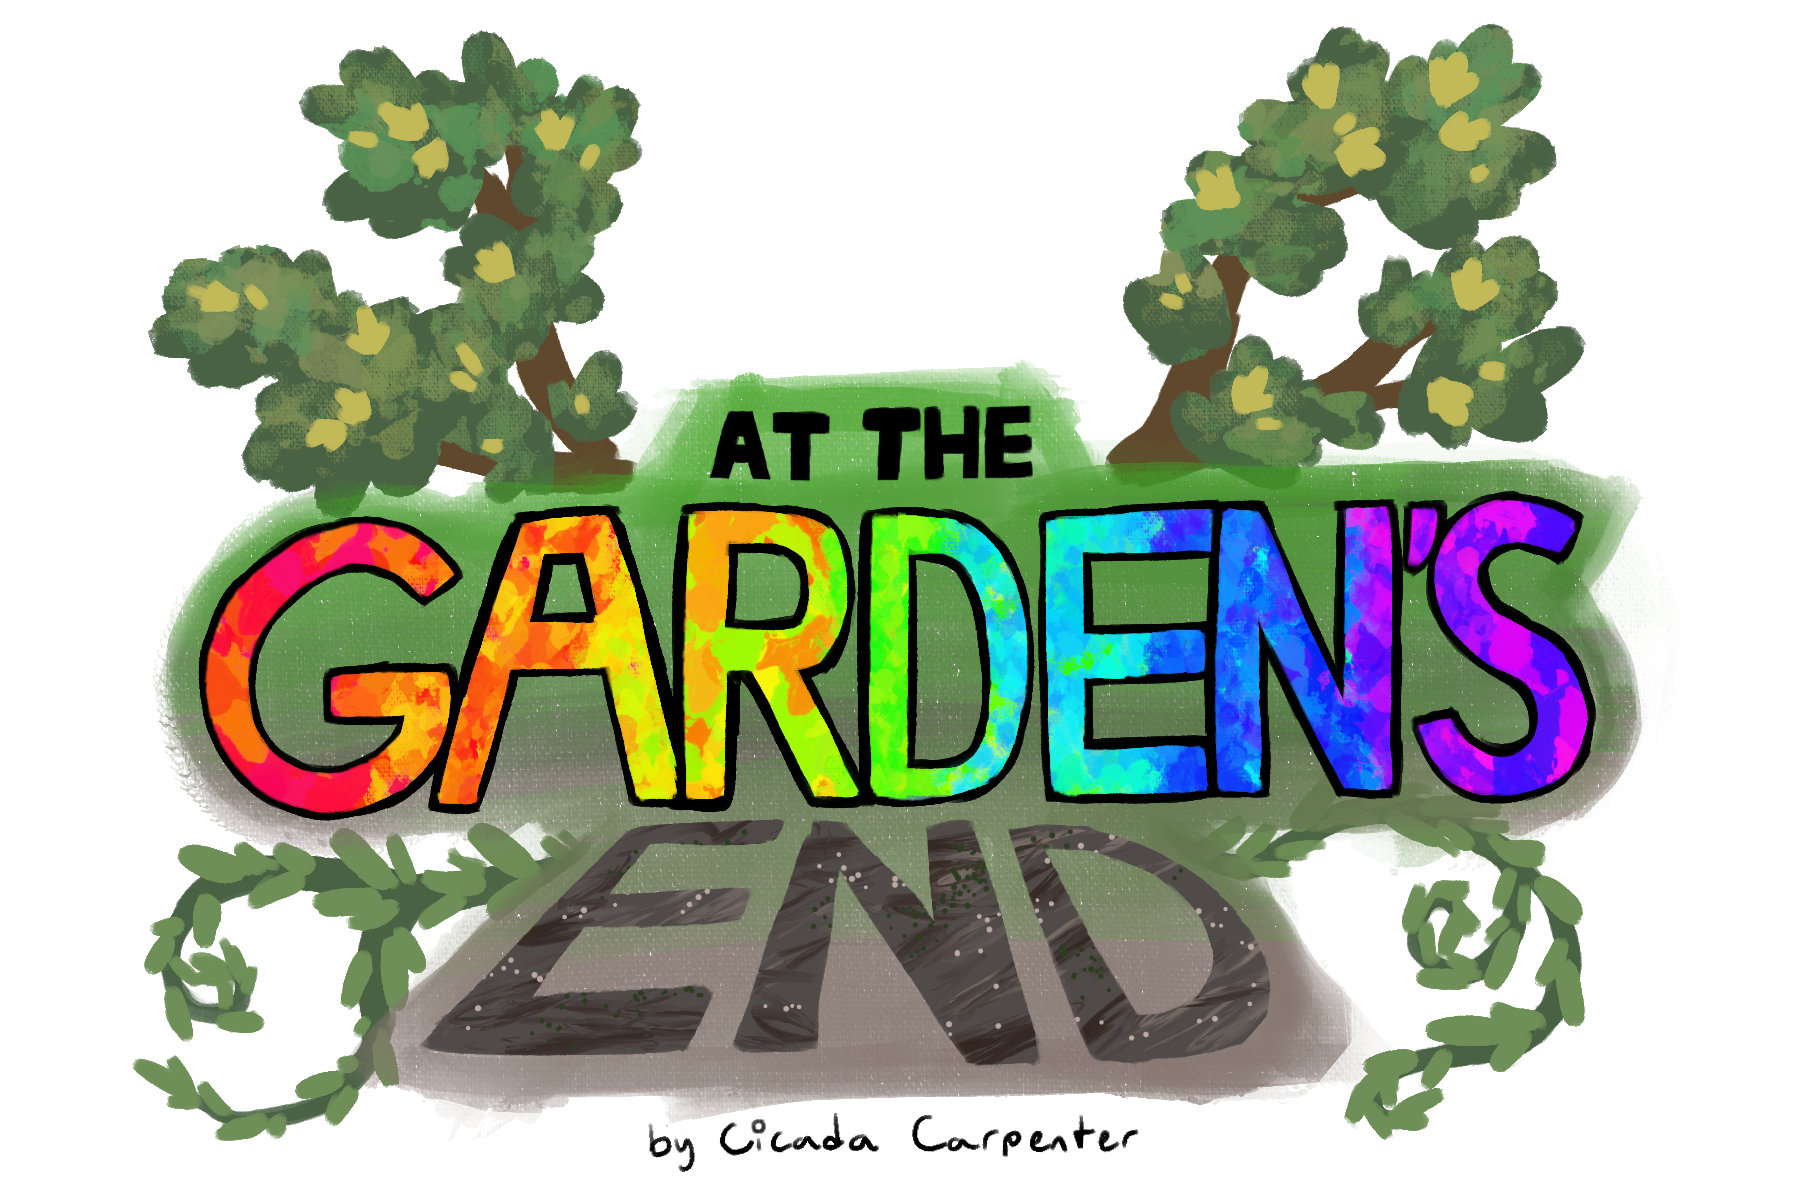 At the Garden's End